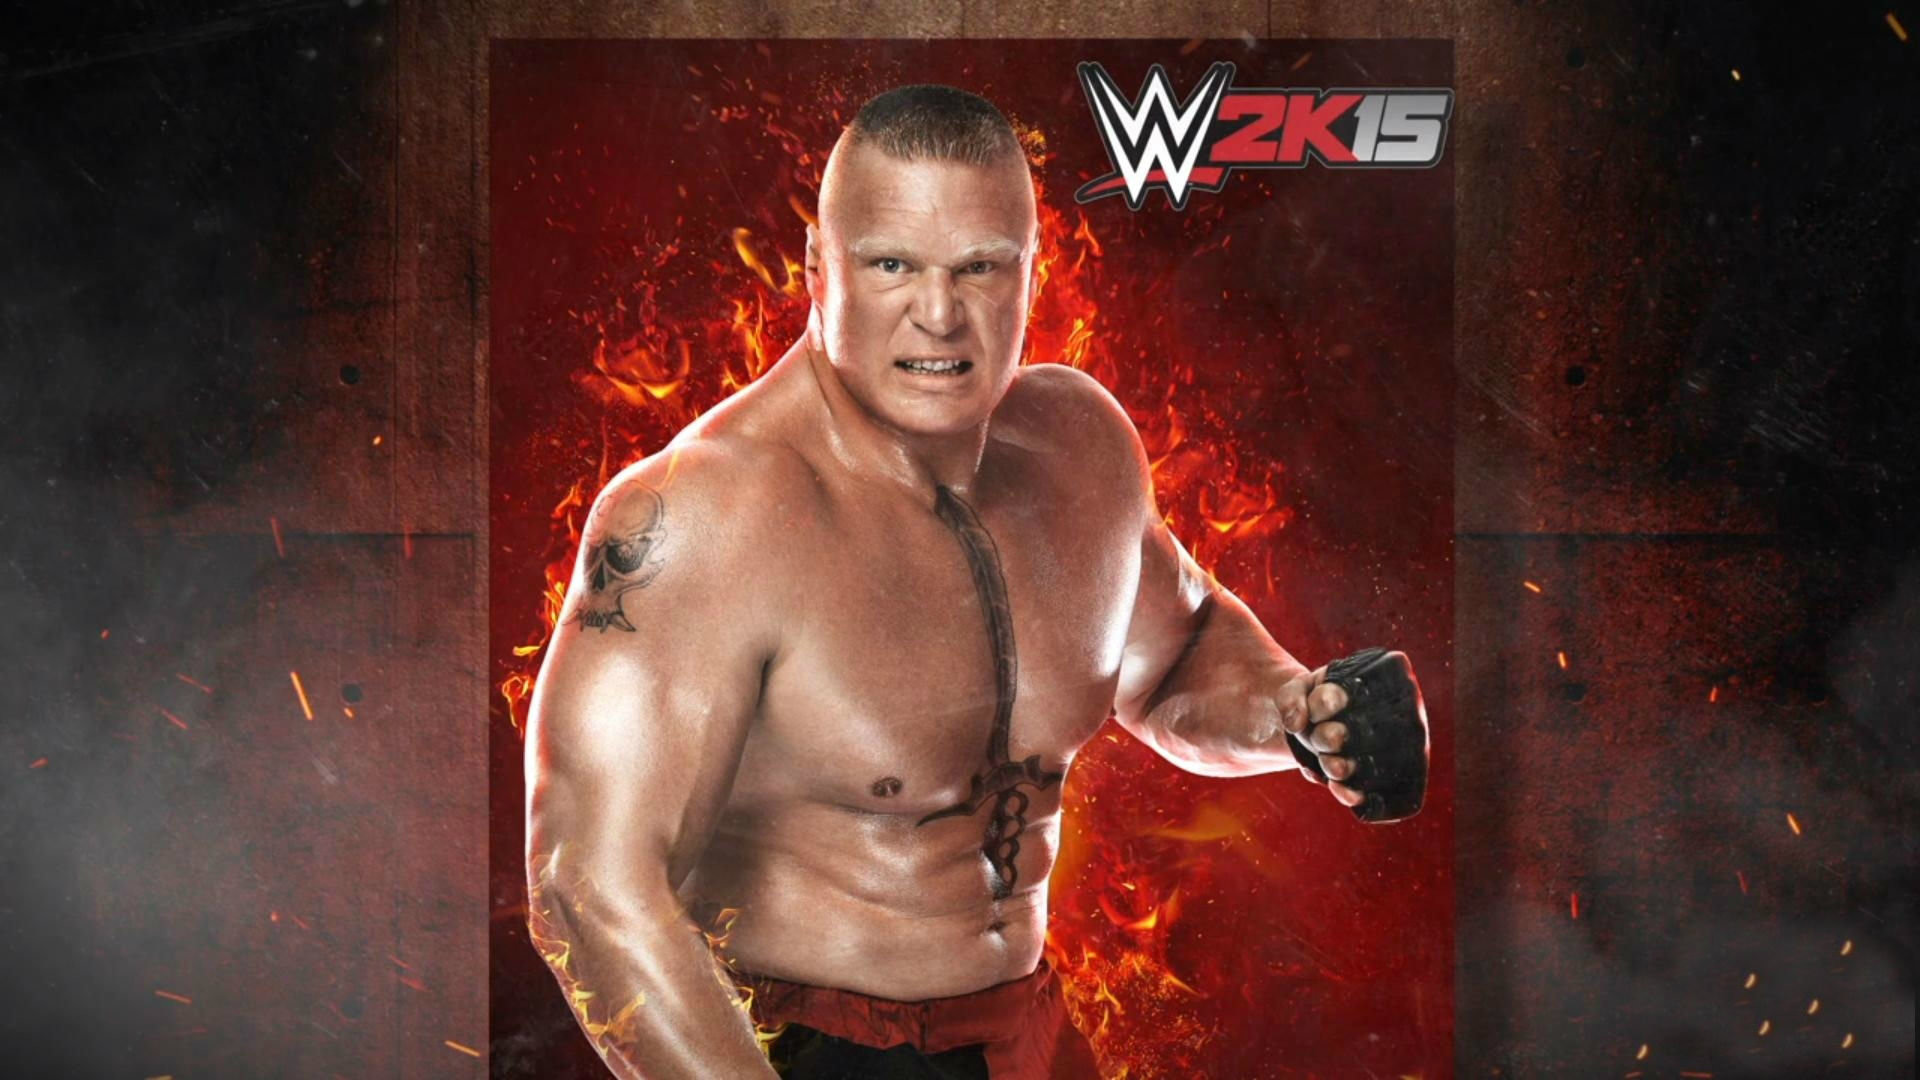 1920x1080 Free Download WWE Champion Brock Lesnar Wallpaper